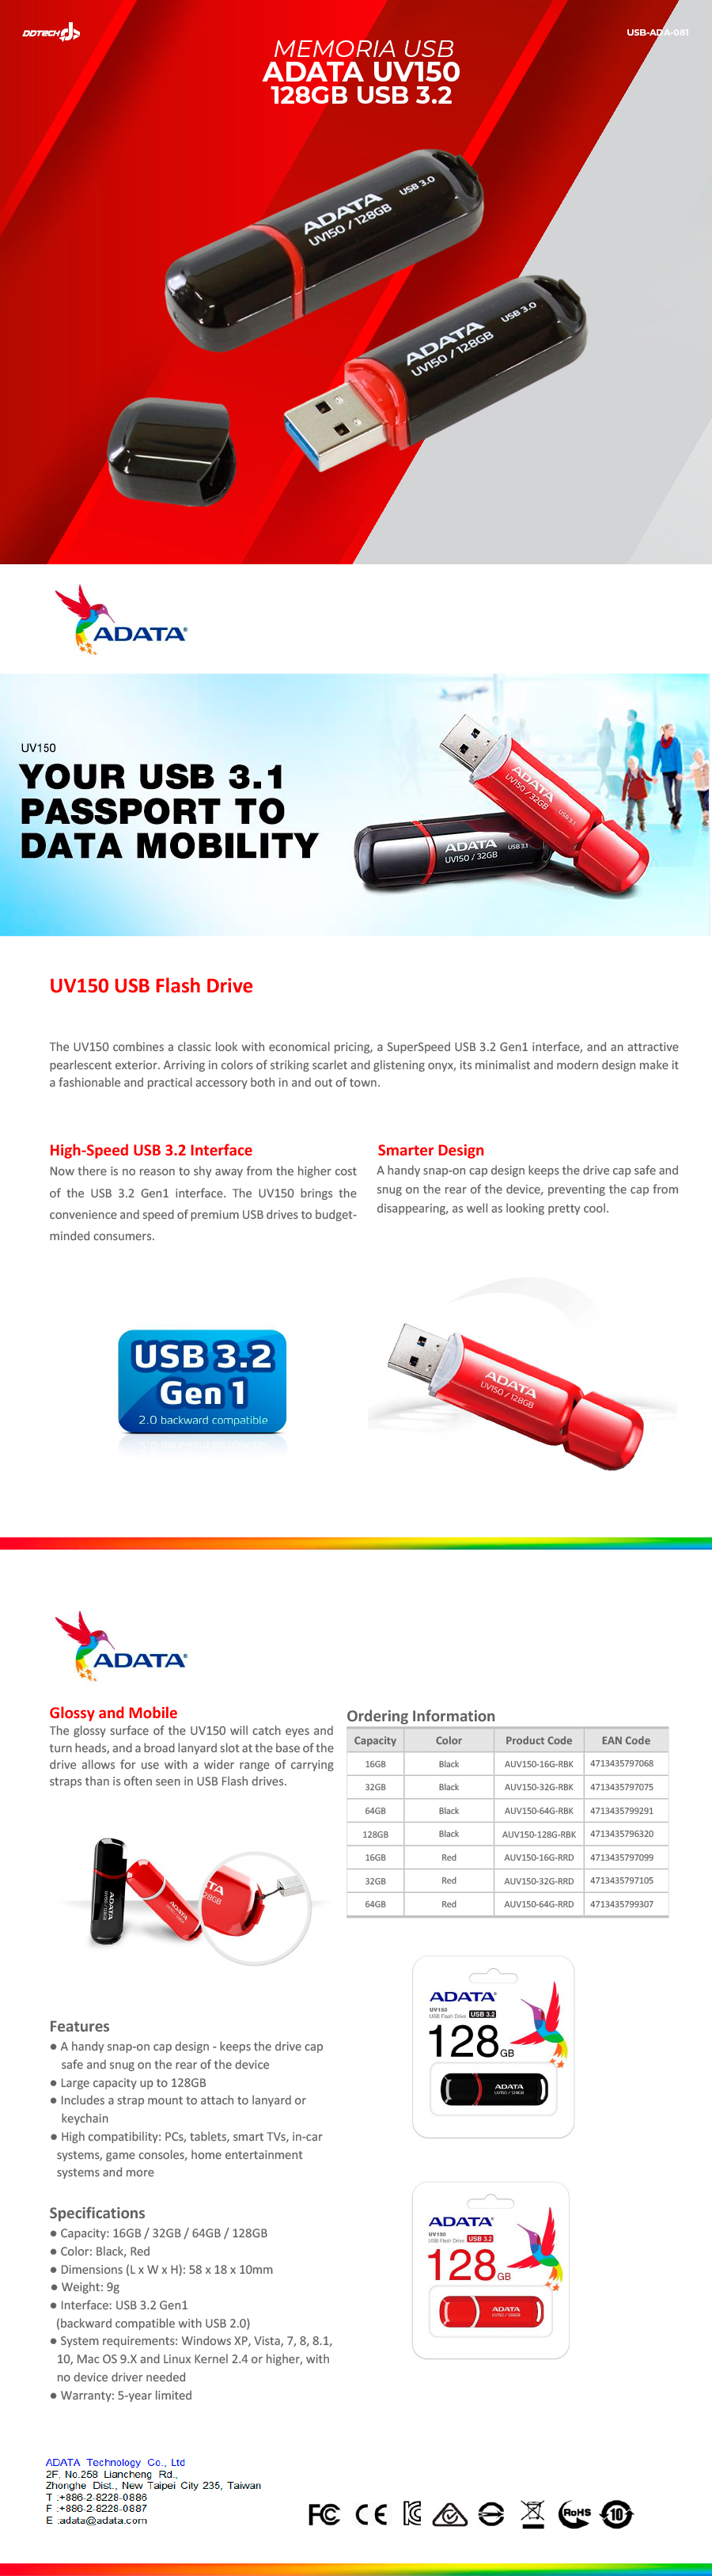  ADATA UV150 64GB USB 3.0 Snap-on Cap Flash Drive